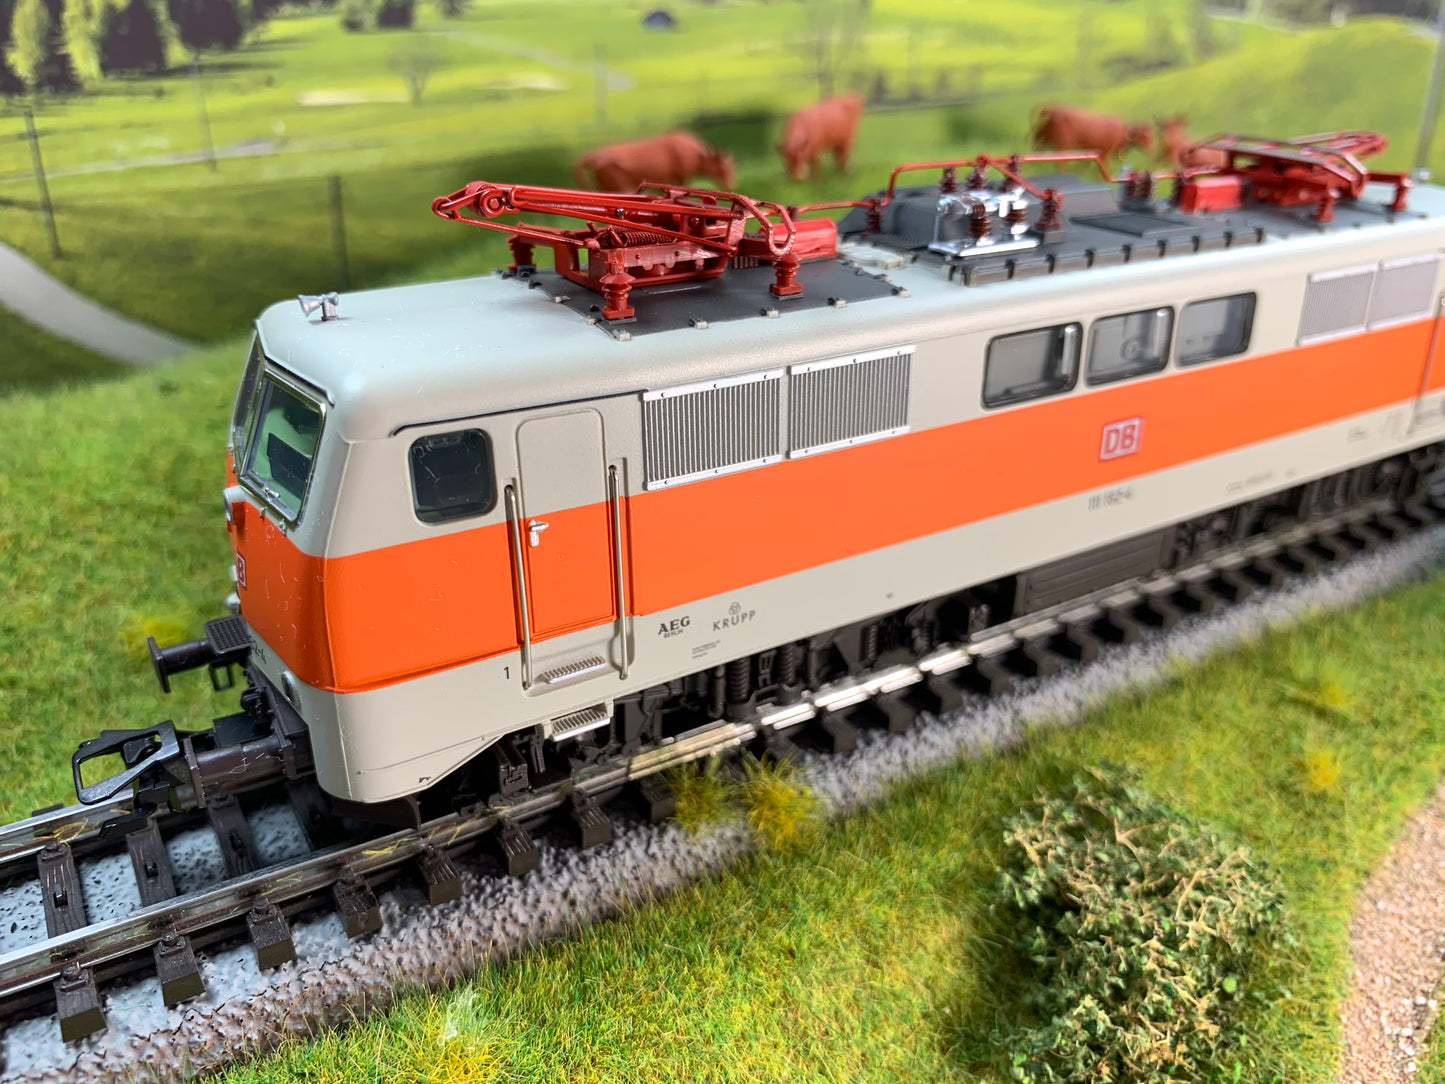 Marklin 37313 - Class 111 Electric Locomotive